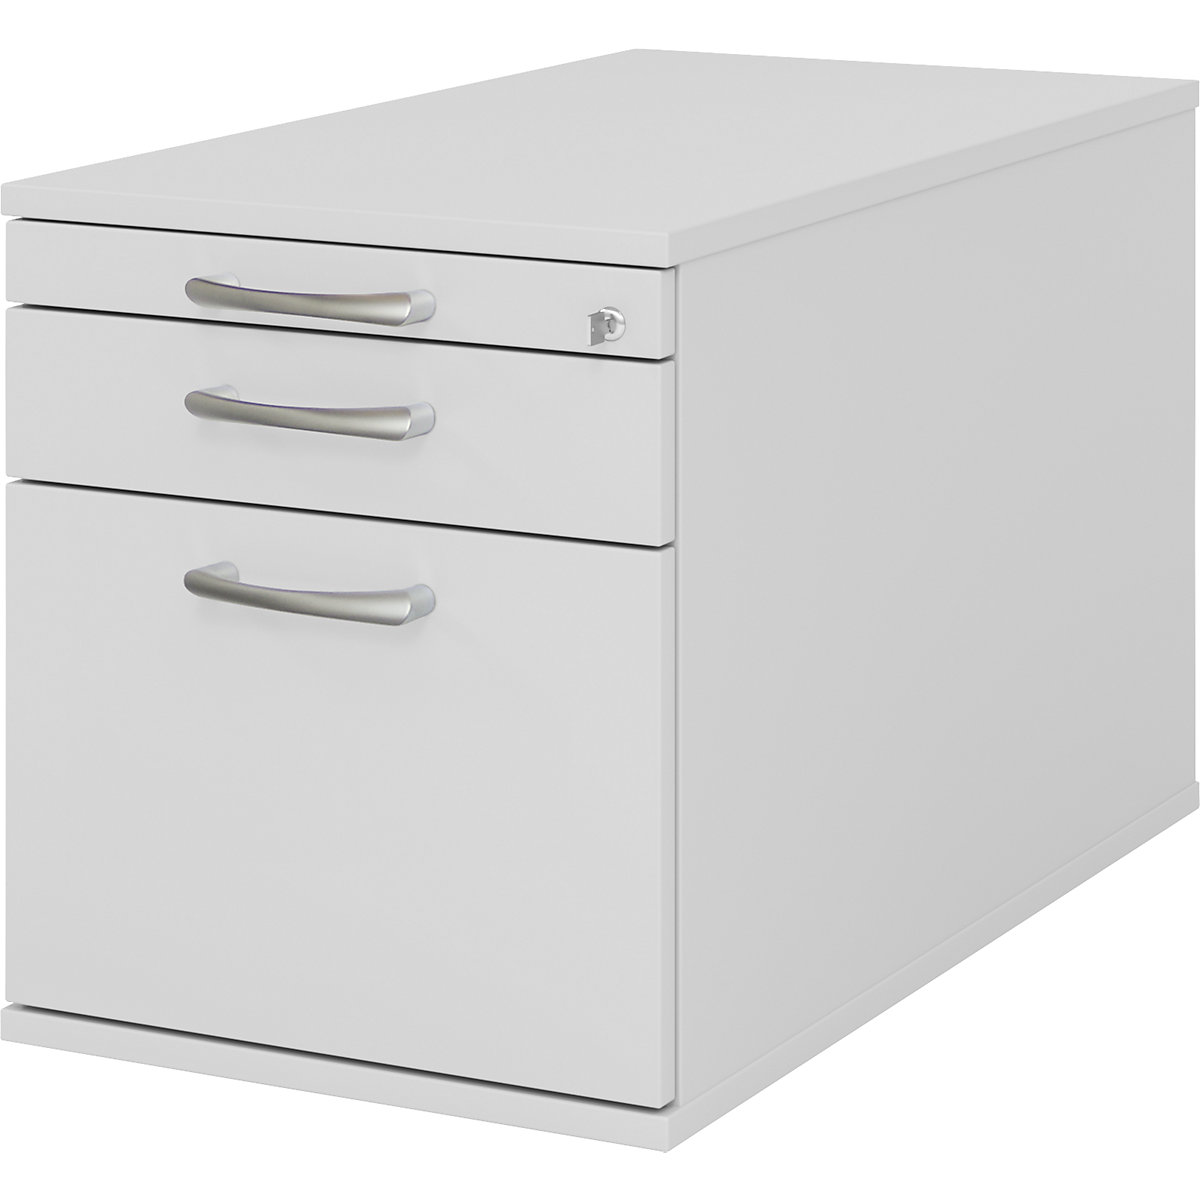 Mobile pedestal ANNY – eurokraft pro, 1 utensil drawer, 1 drawer, 1 file suspension drawer, depth 800 mm, light grey-6